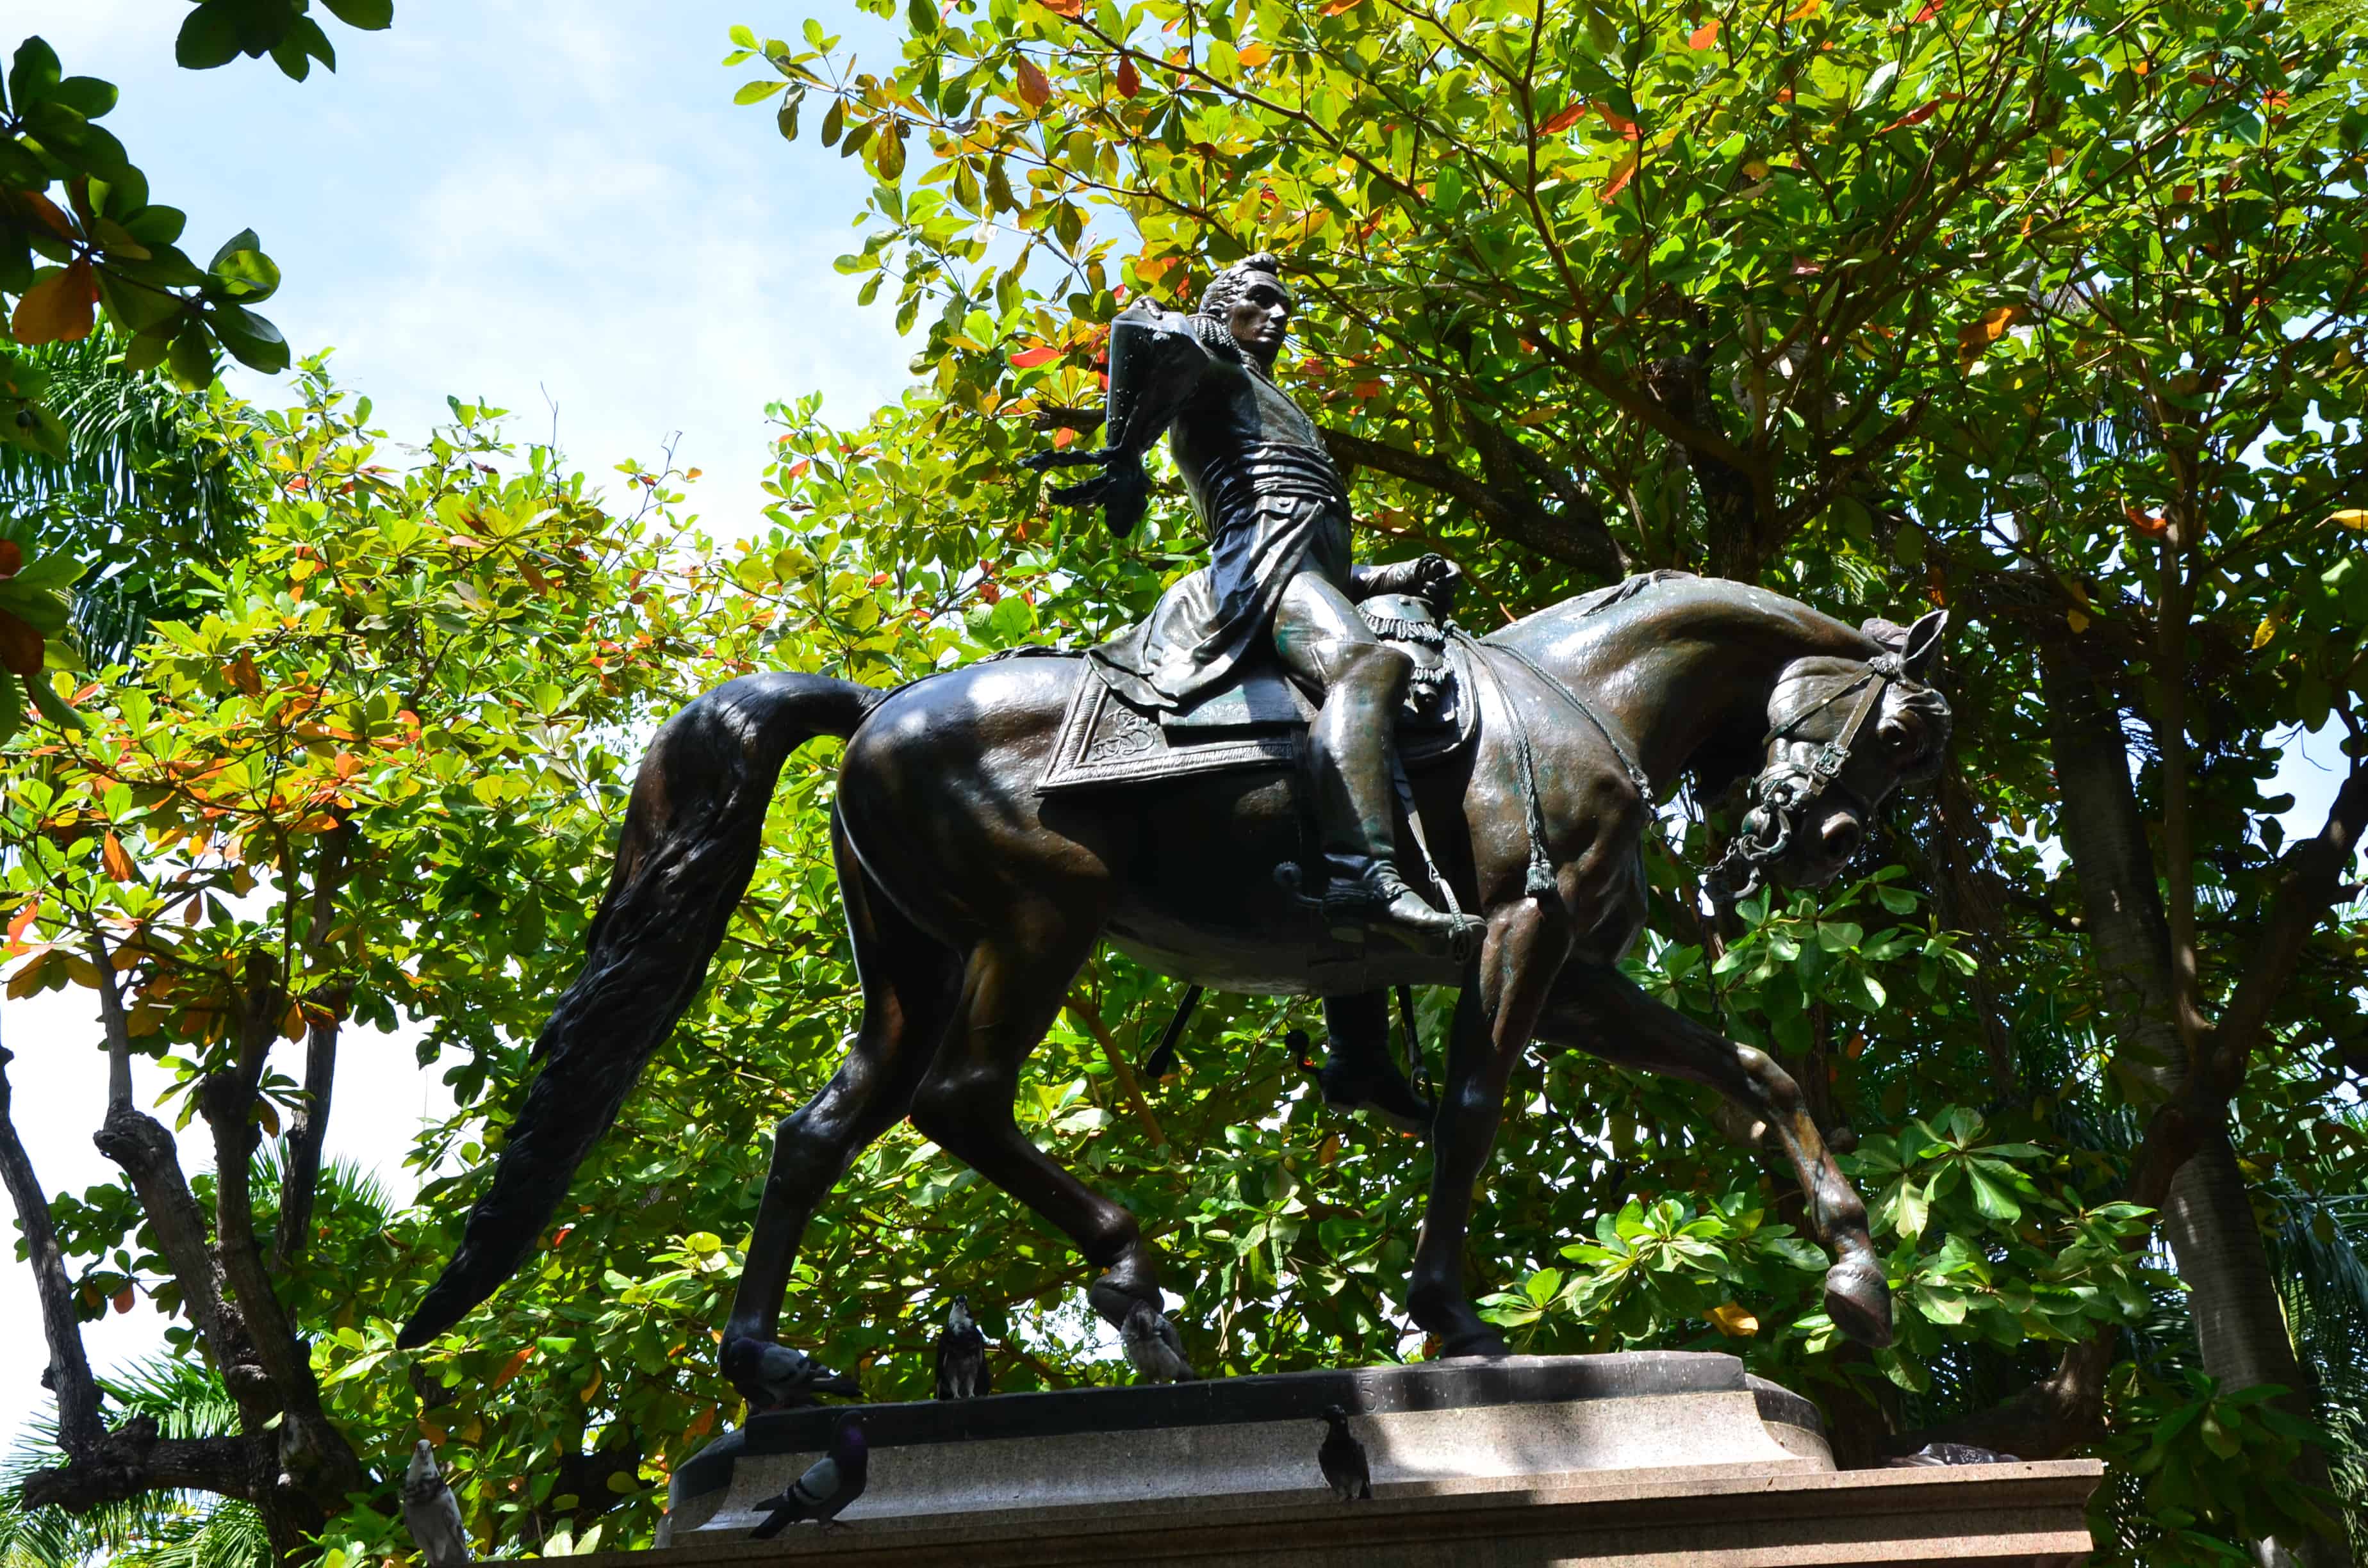 Statue of Simón Bolívar in Parque de Bolívar in El Centro, Cartagena, Bolívar, Colombia